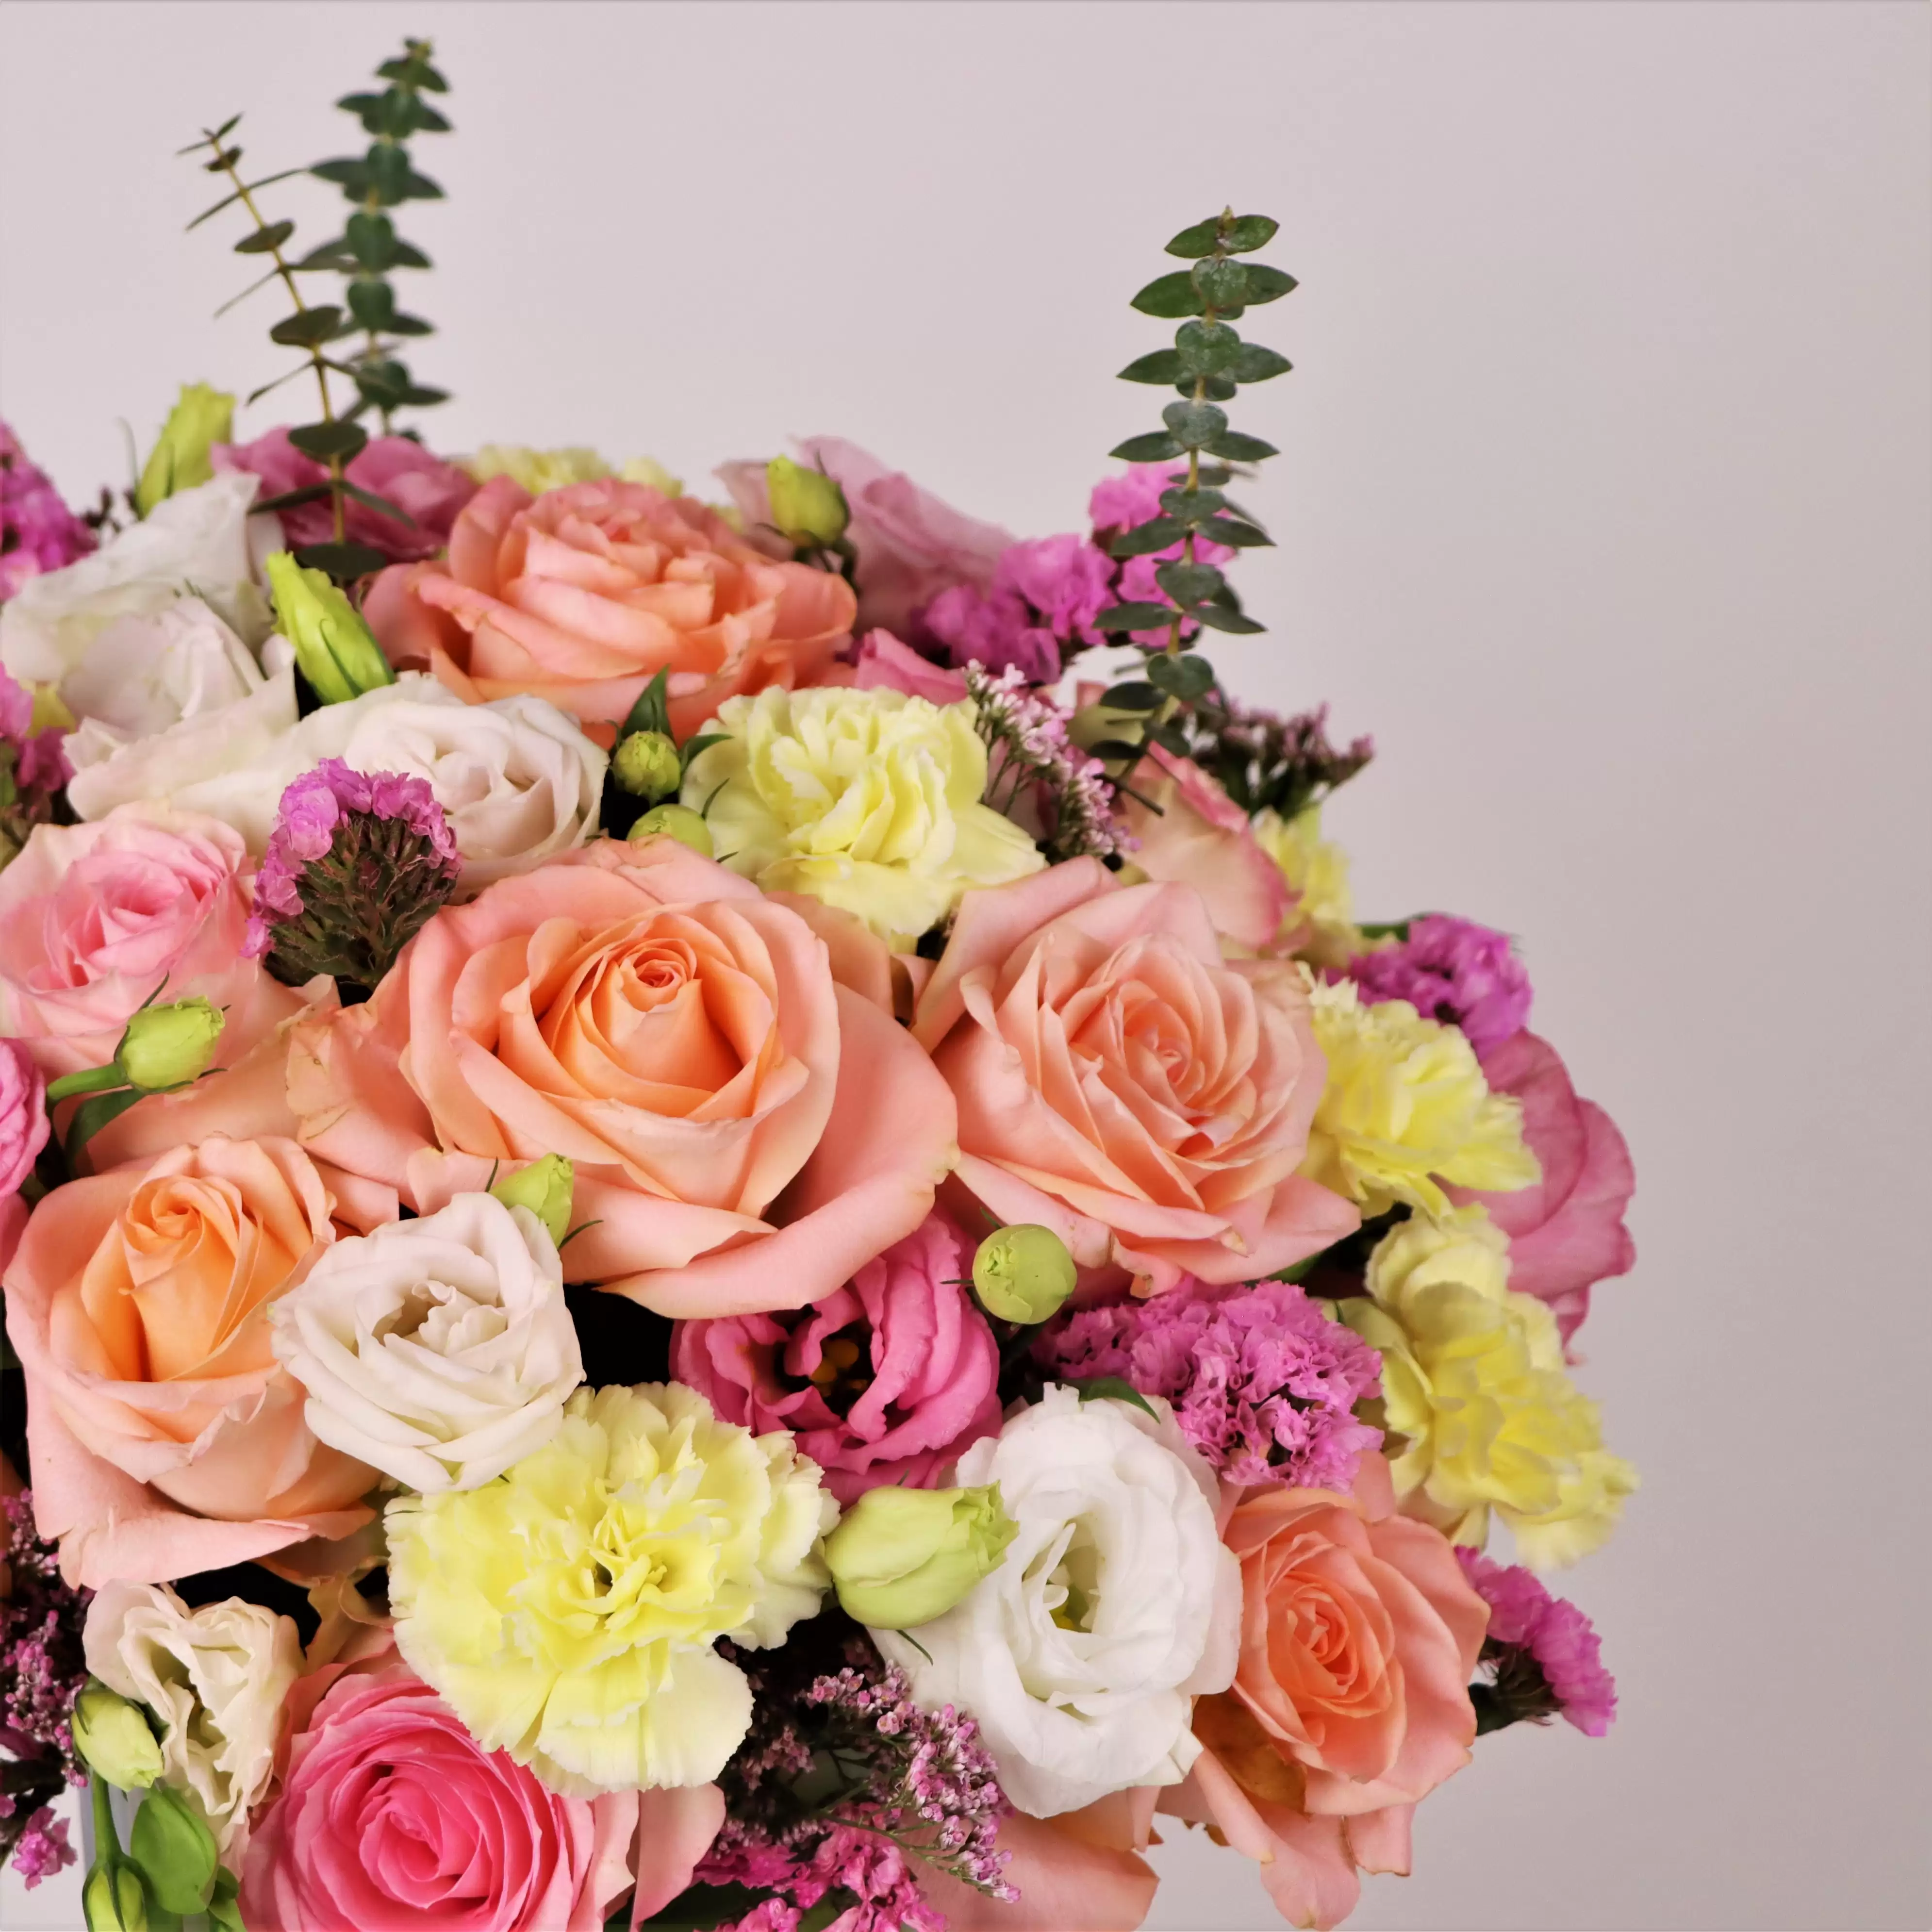 Flowers In A Vase | Gift Flowers Online In Bahrain - Flora D'lite